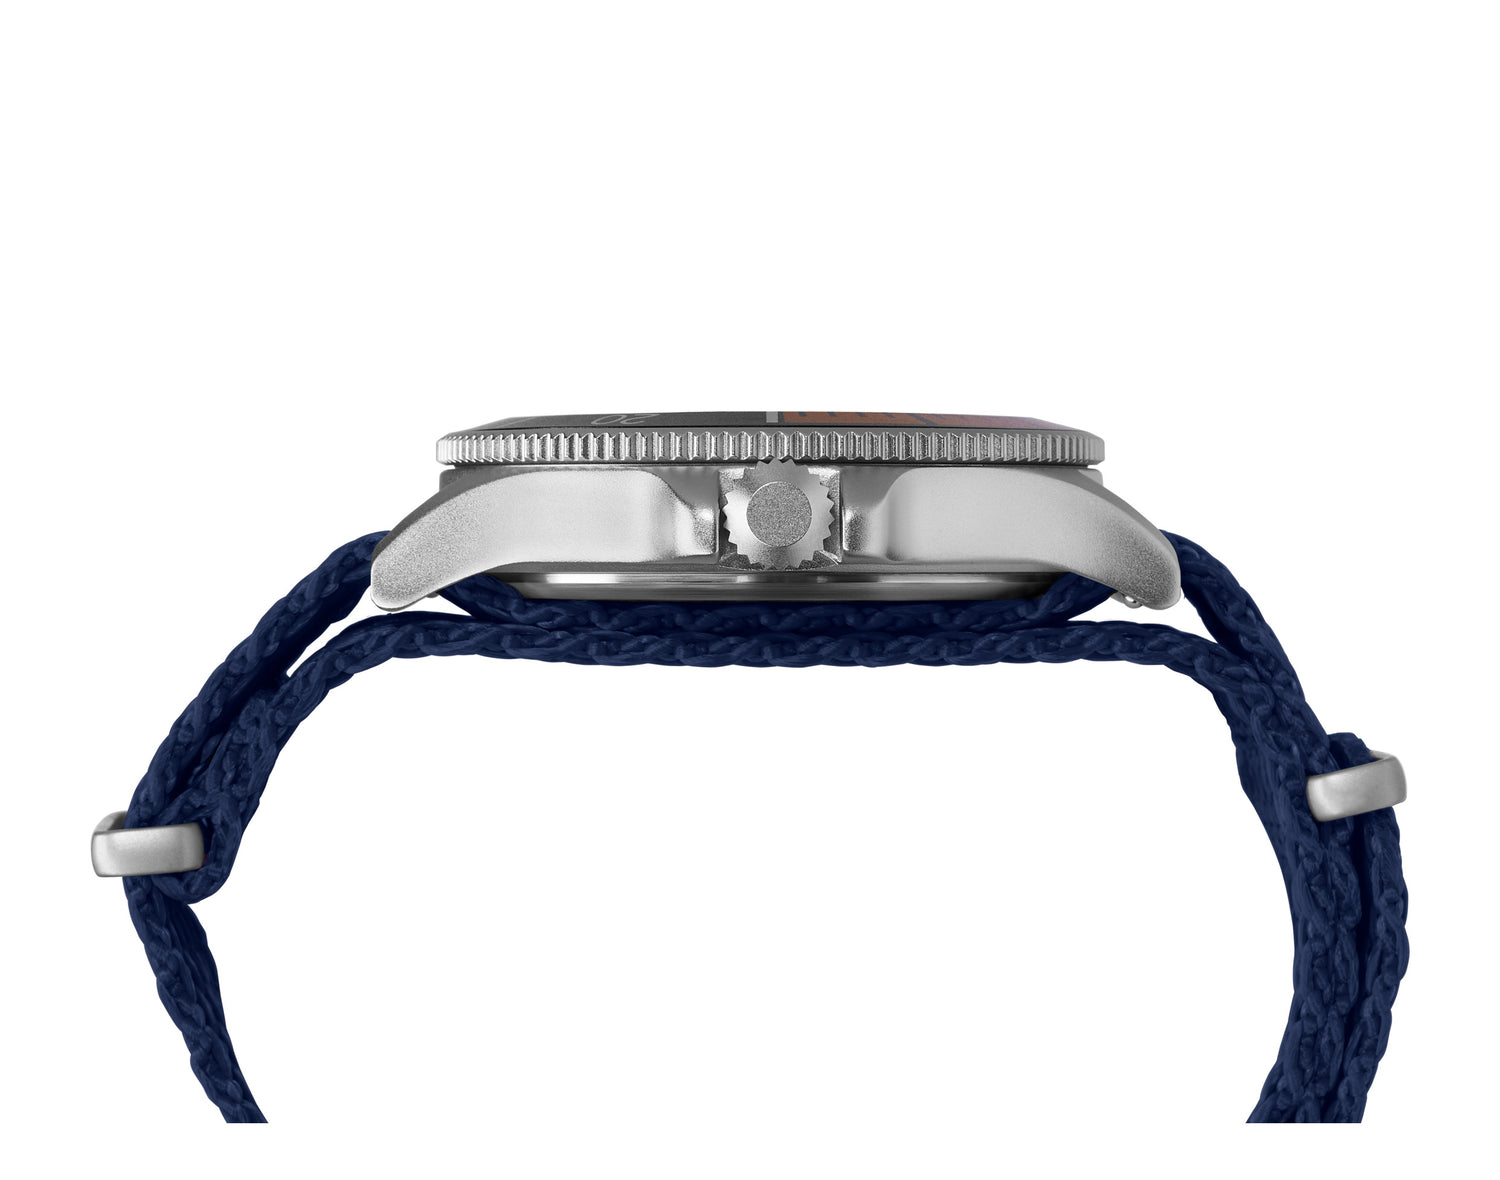 Timex Allied Coastline 43mm Fabric Strap Watch